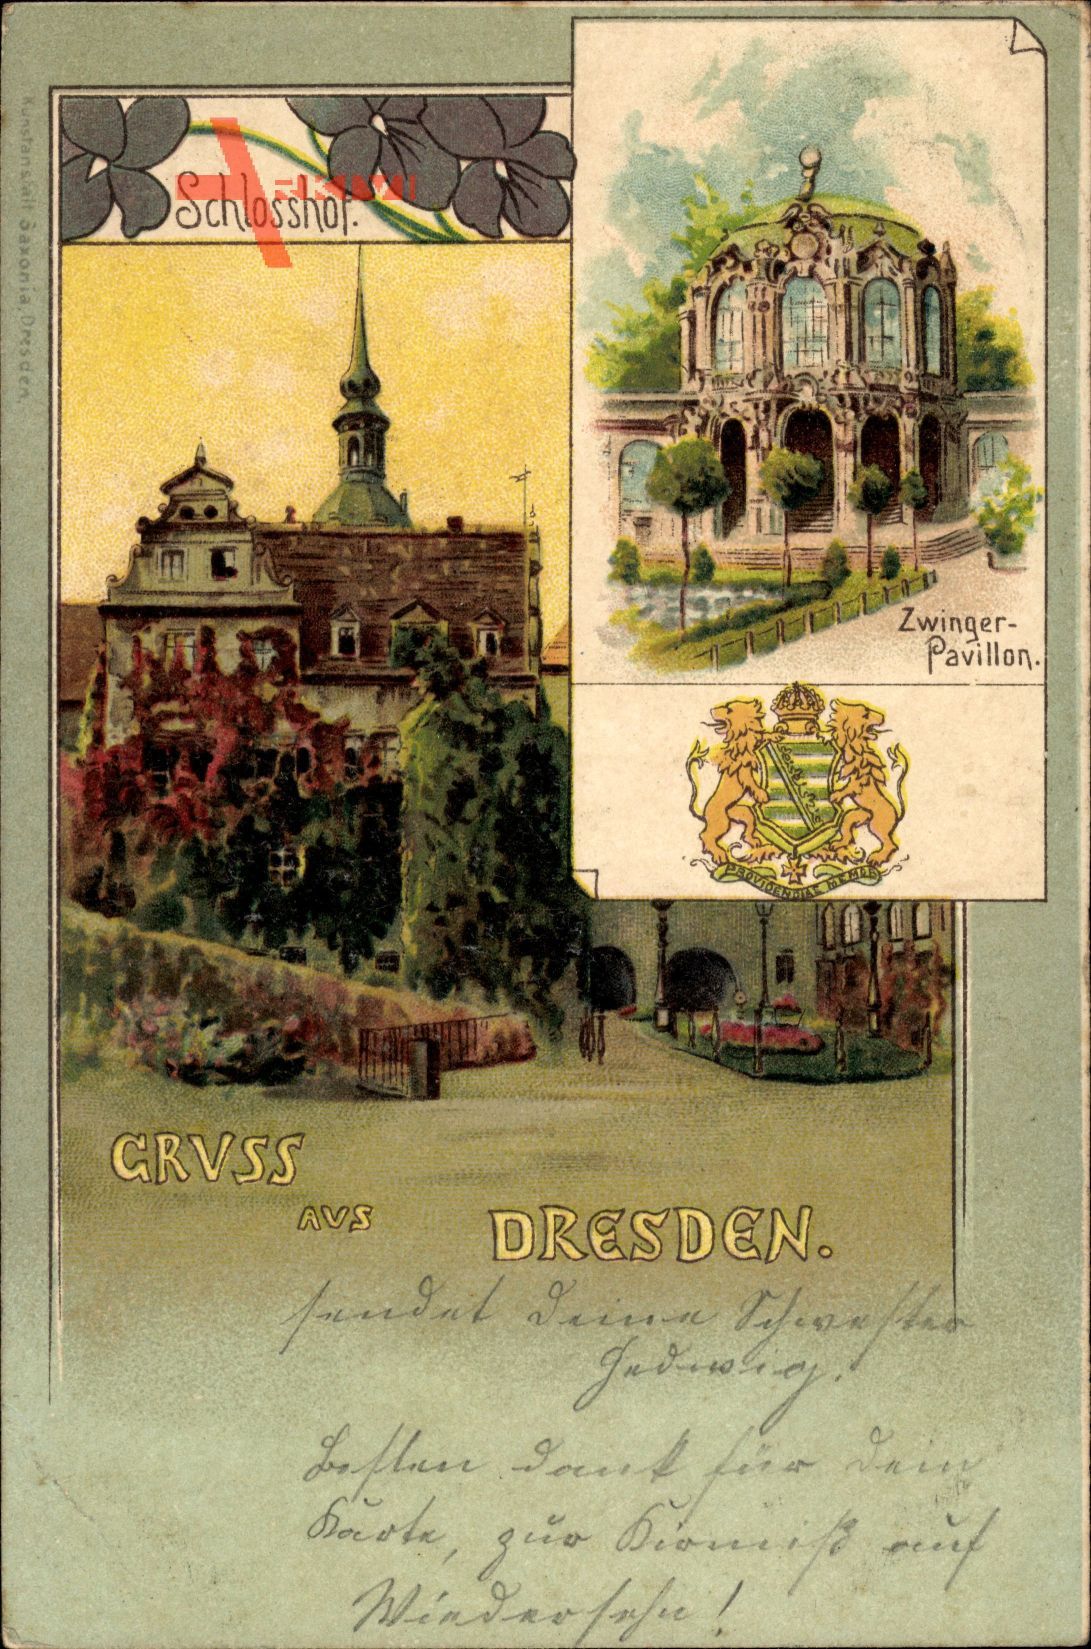 Dresden, Blick auf den Zwingerpavillon und Schlosshof, Wappen